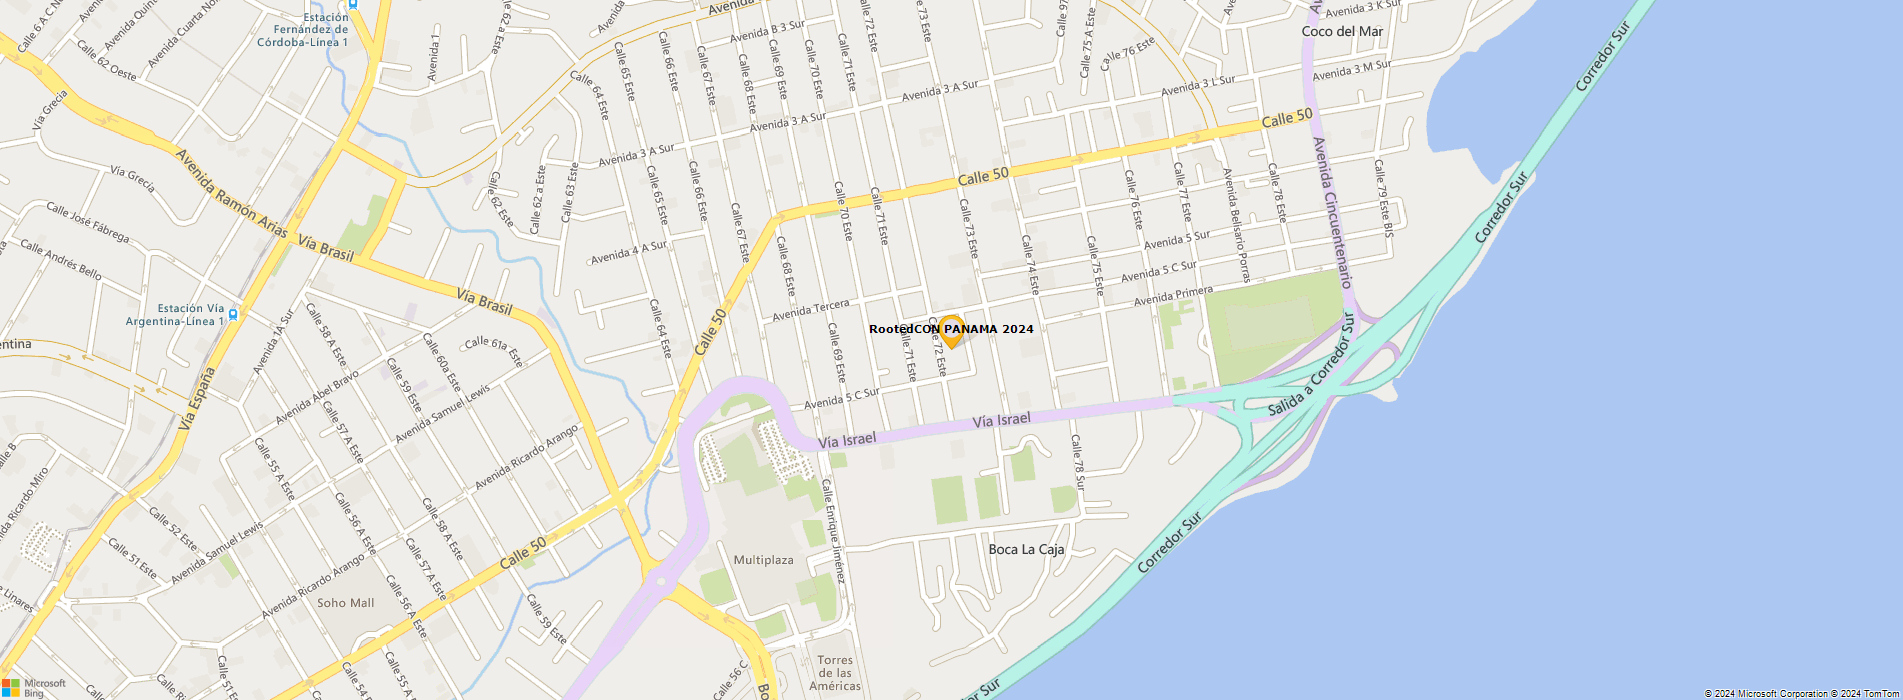 Bing Map of Sheraton Grand Panama